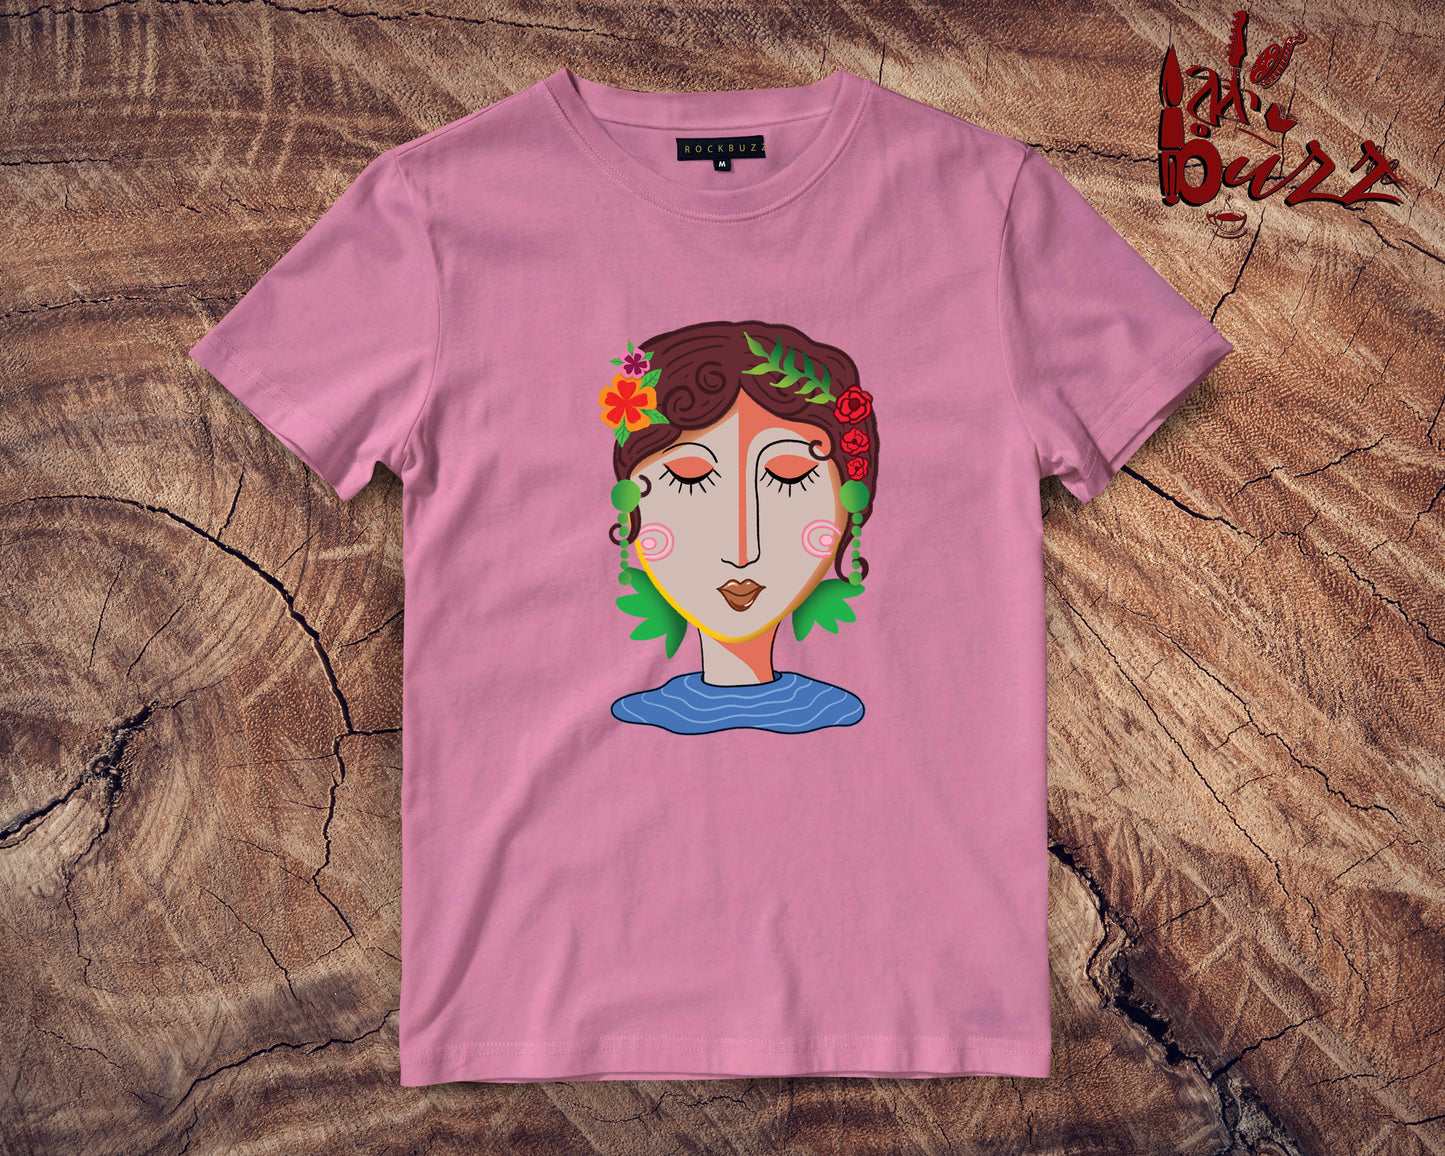 Abstract designed Girl printed tshirt